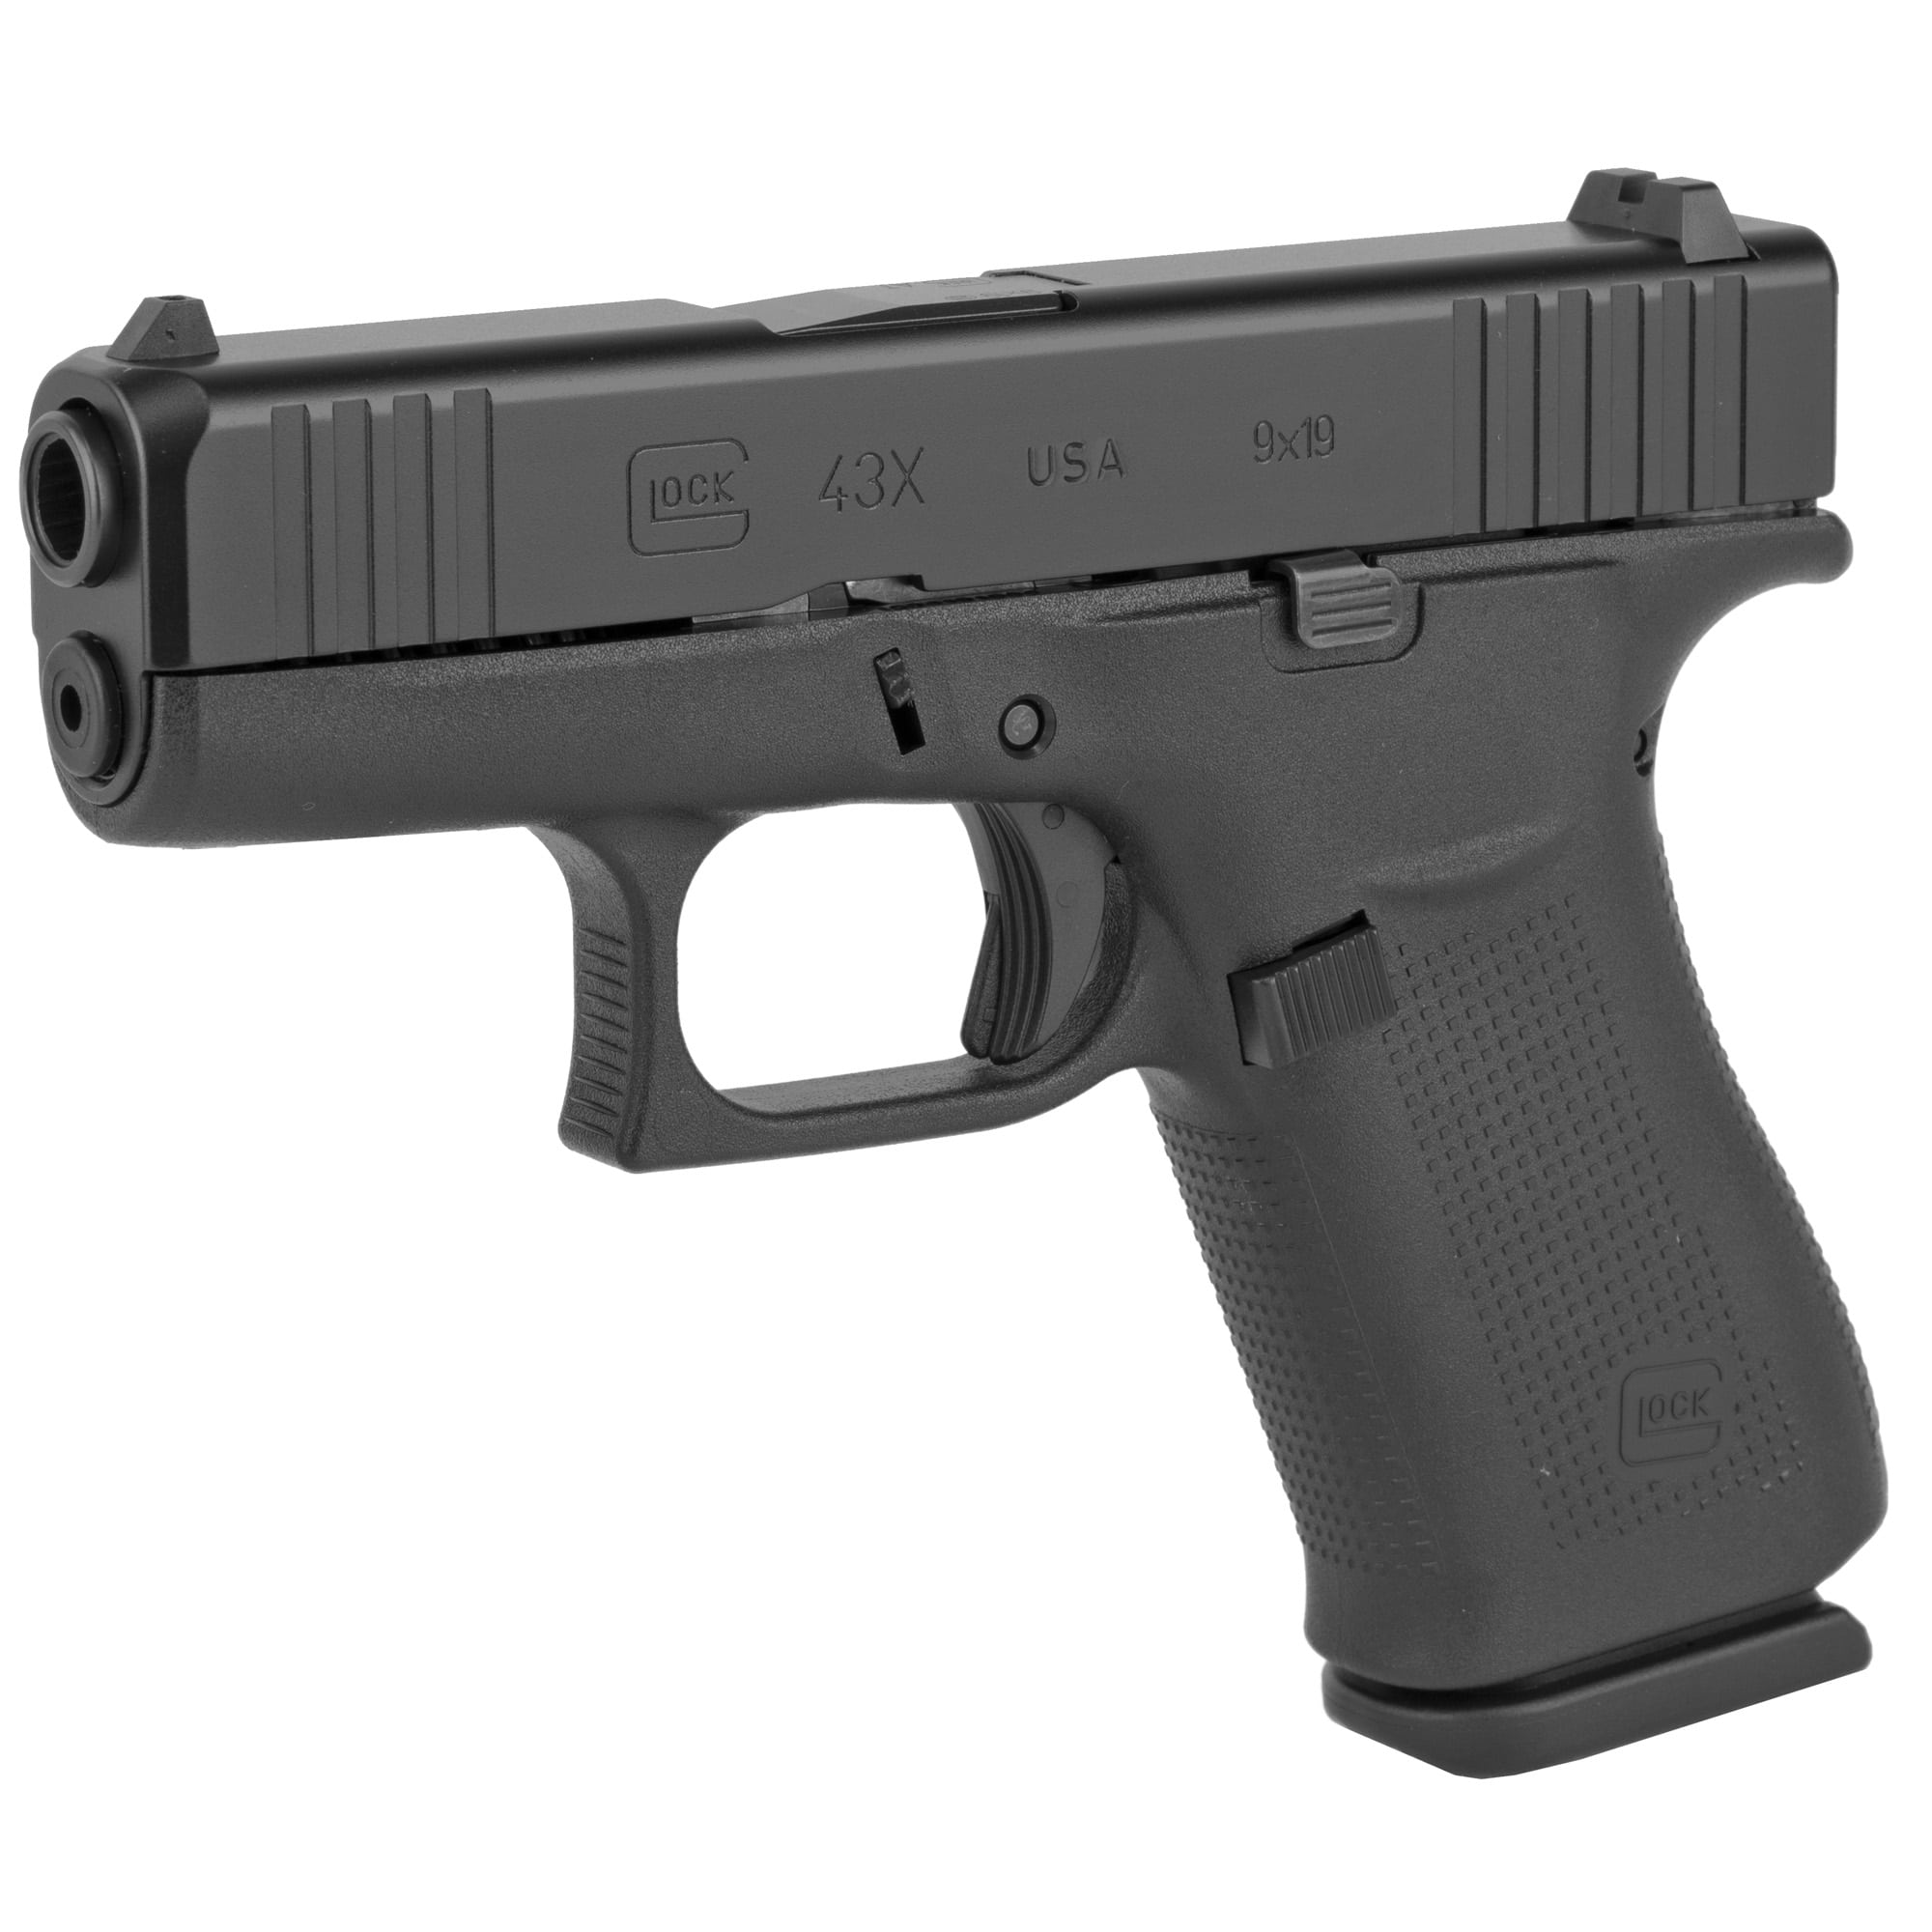 Glock G43X Subcompact Pistol - 9mm/10 Round UX4350201 - USA Made